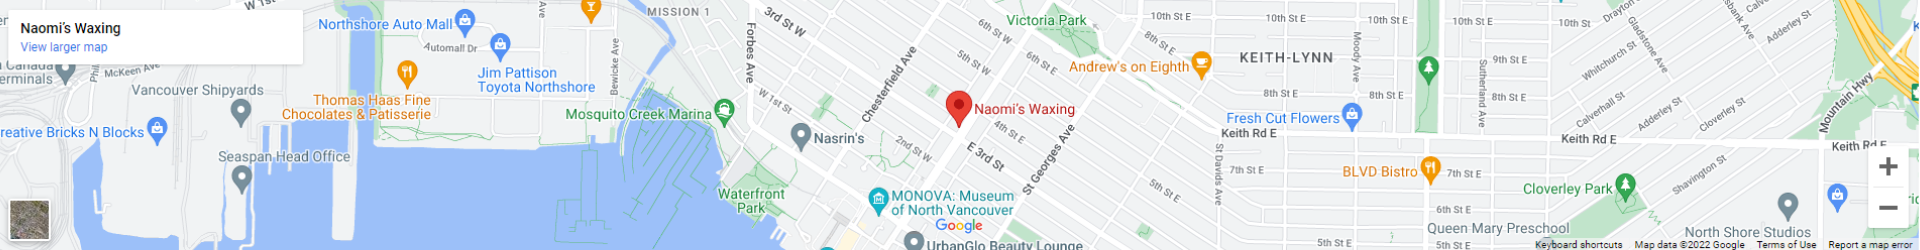 Naomi's Waxing and Laser